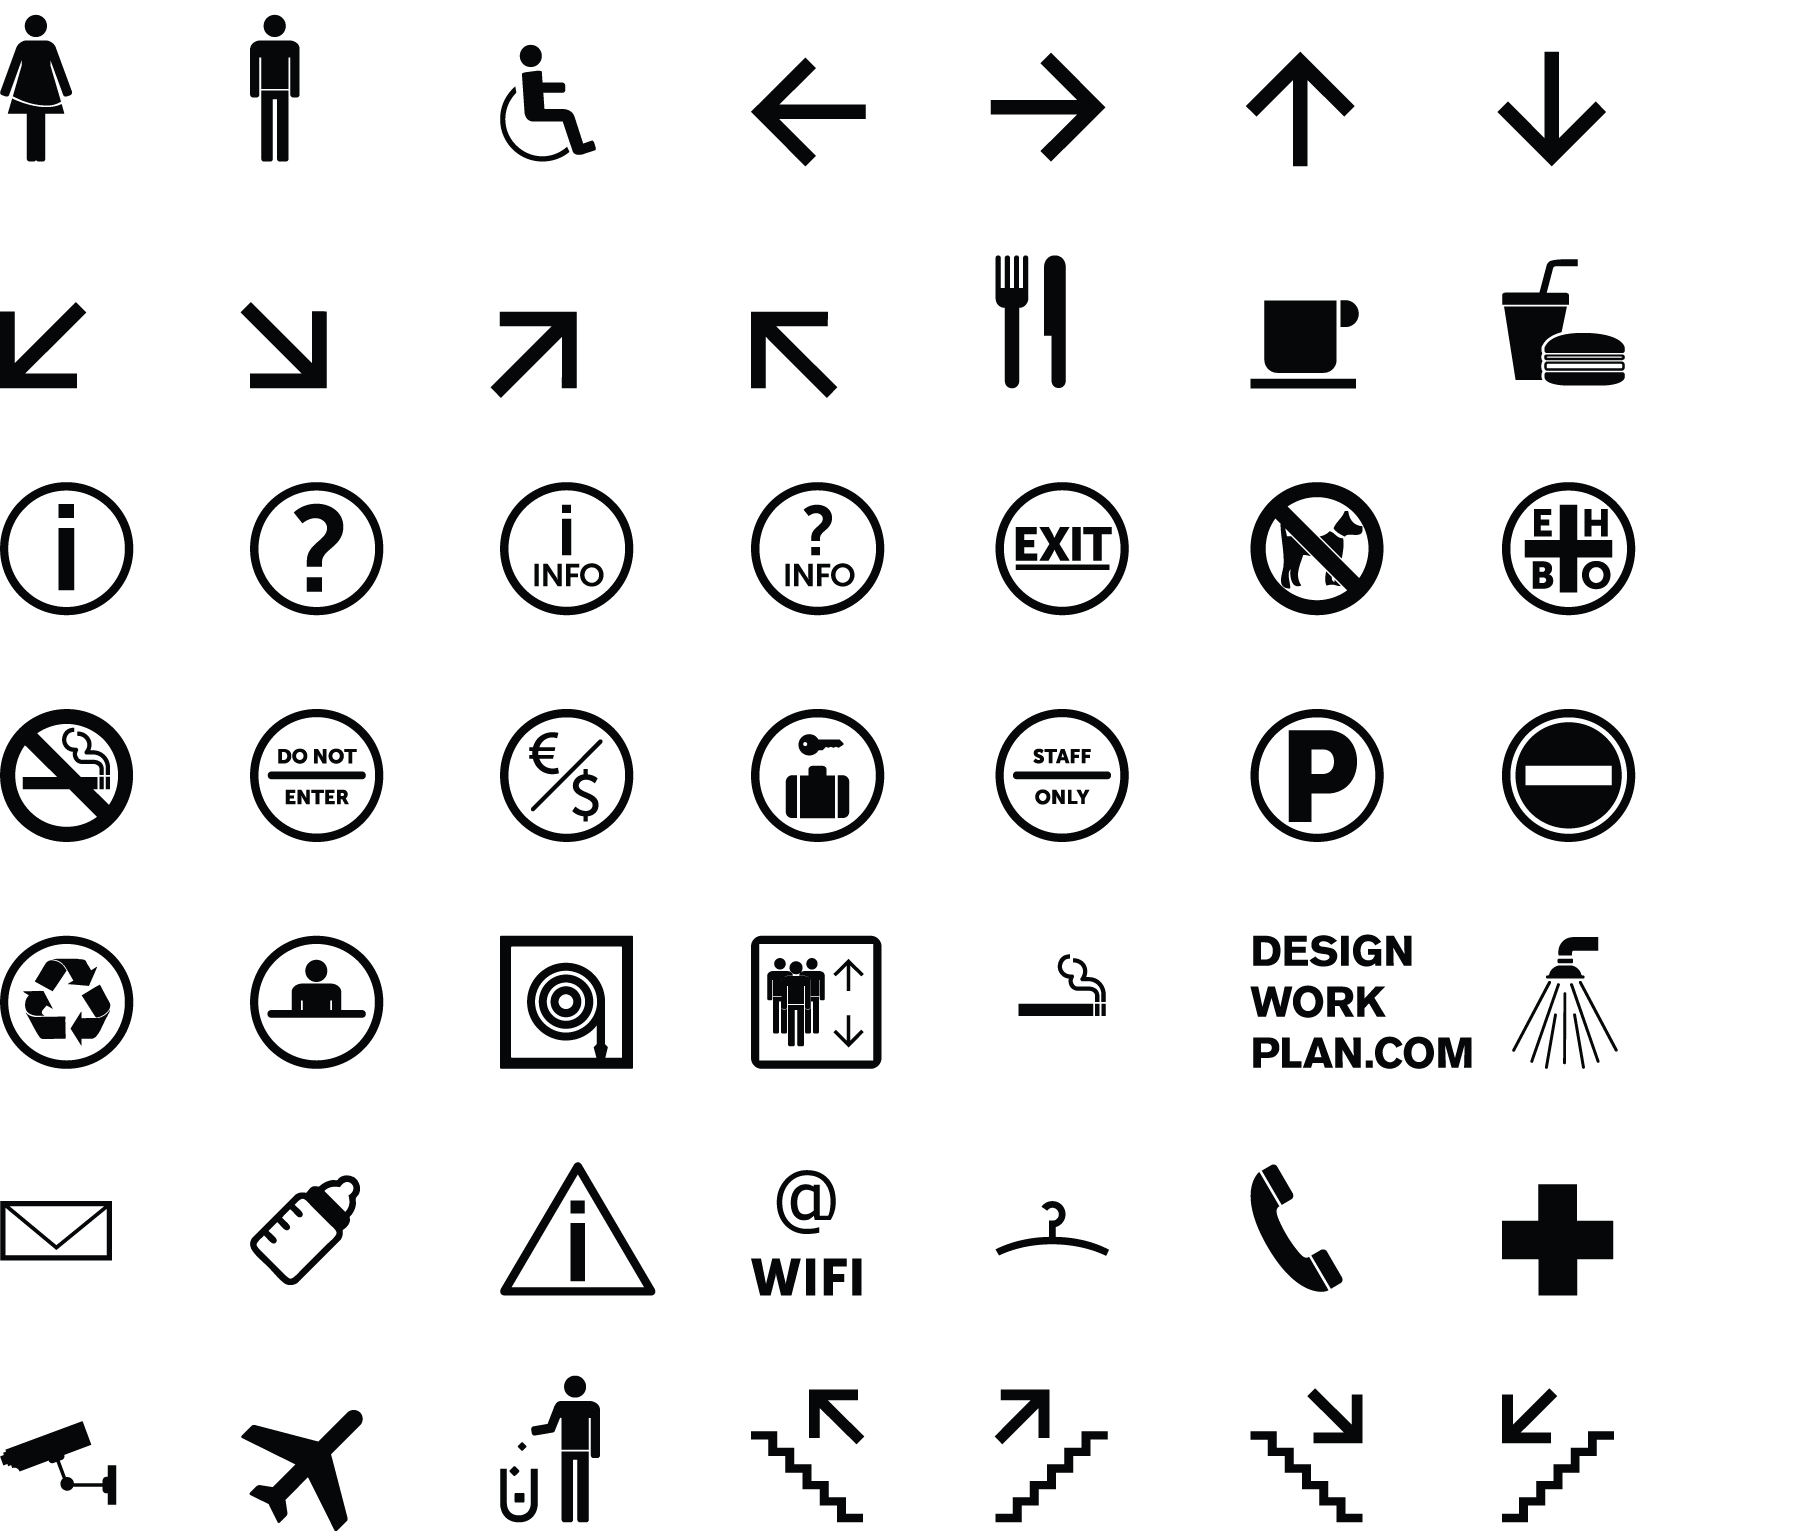 Sign Symbols